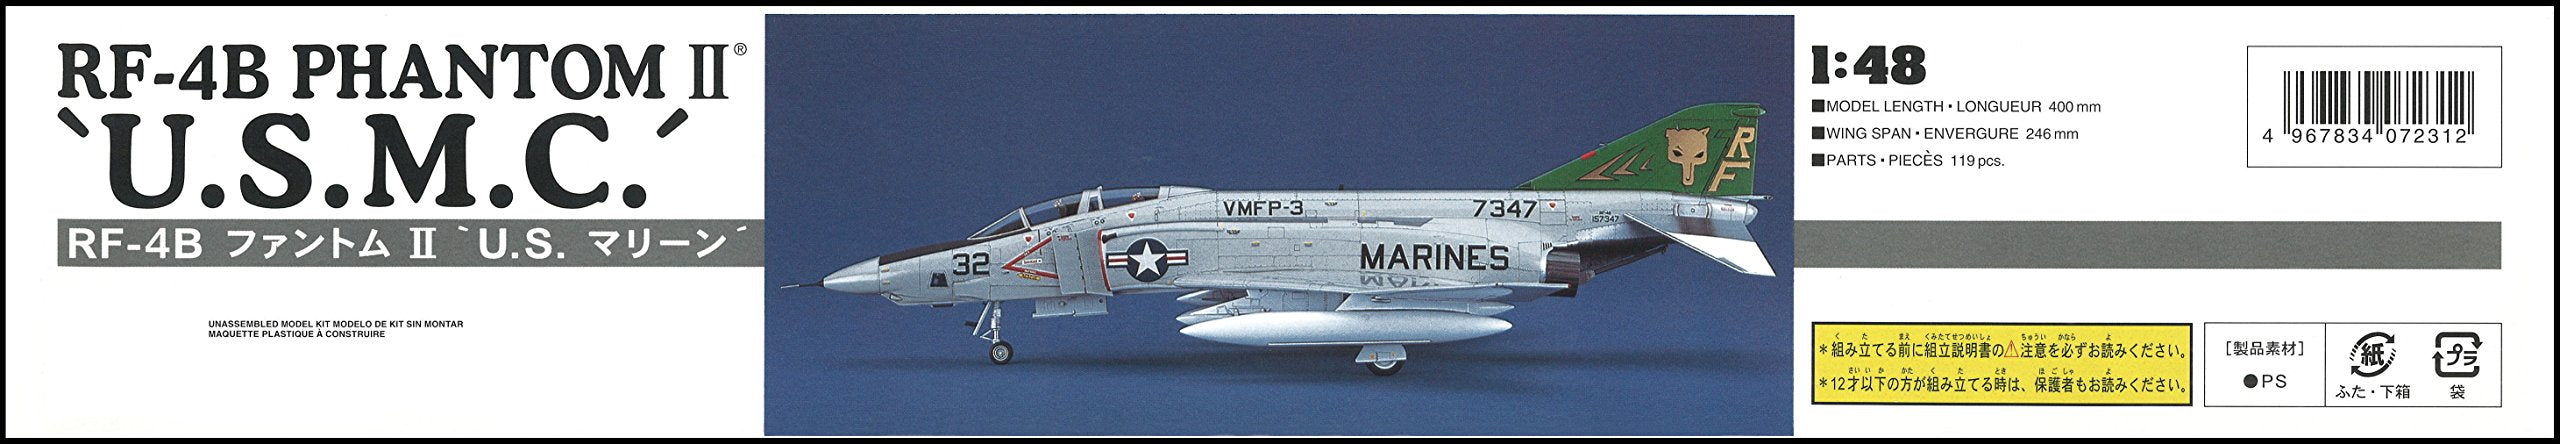 HASEGAWA Pt31 Rf-4B Phantom Ii Us Marine 1/48 Scale Kit